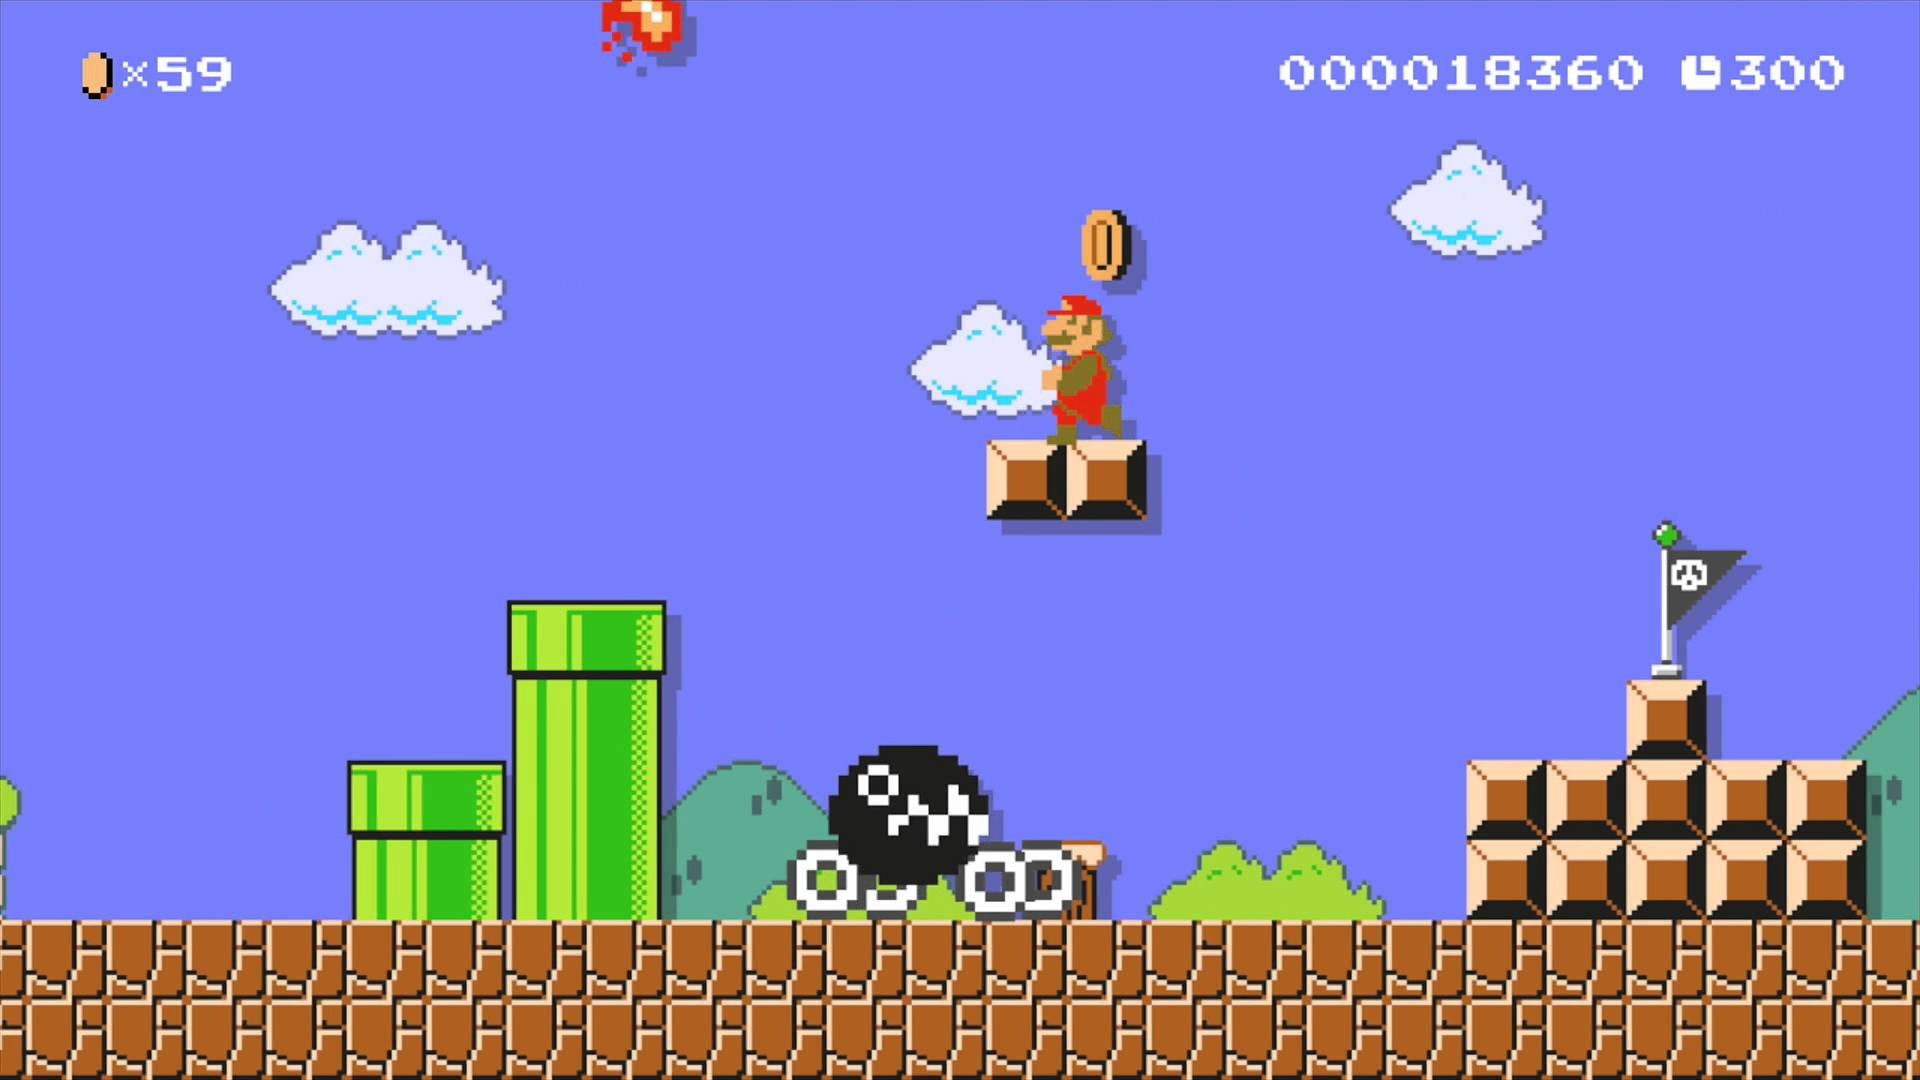 1920x1080 Super Mario Maker Levels: "8-bit Giants"